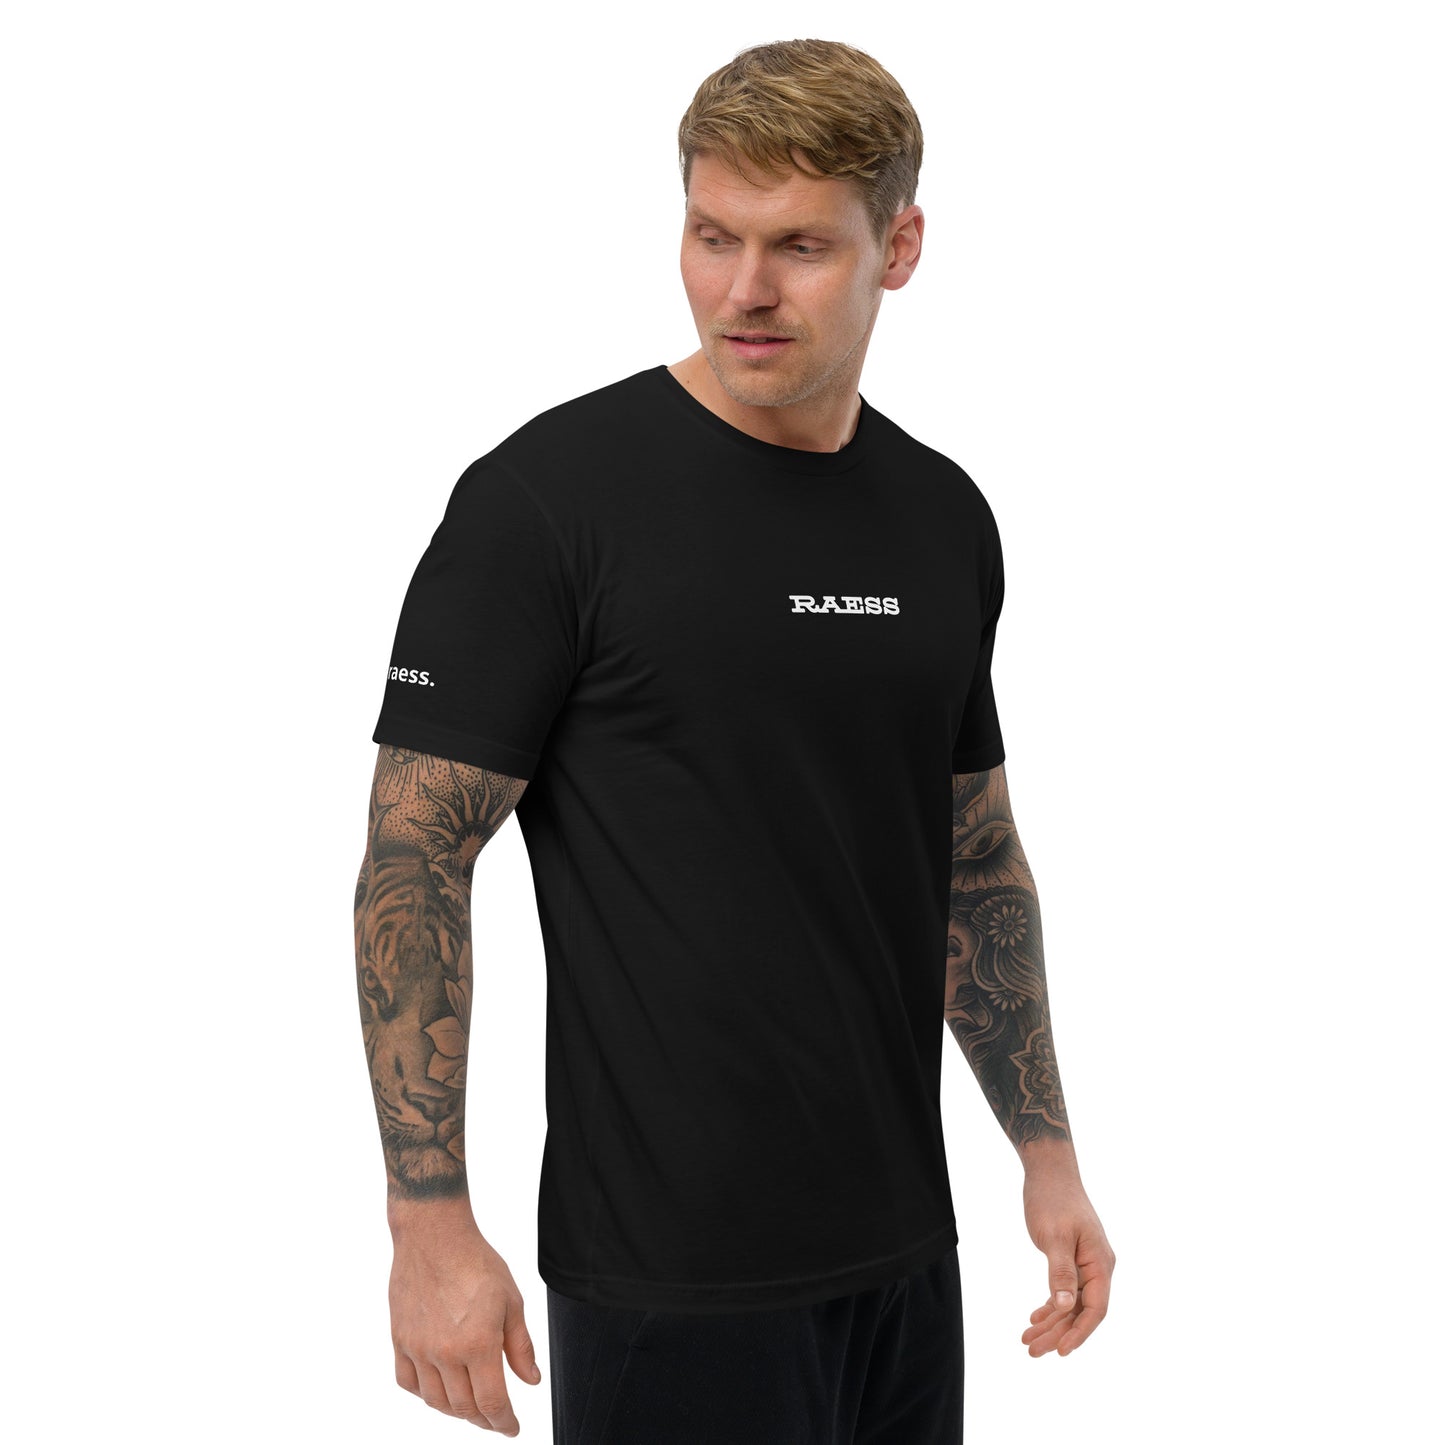 RAESS - Men’s Short Sleeve T-shirt ( Black)